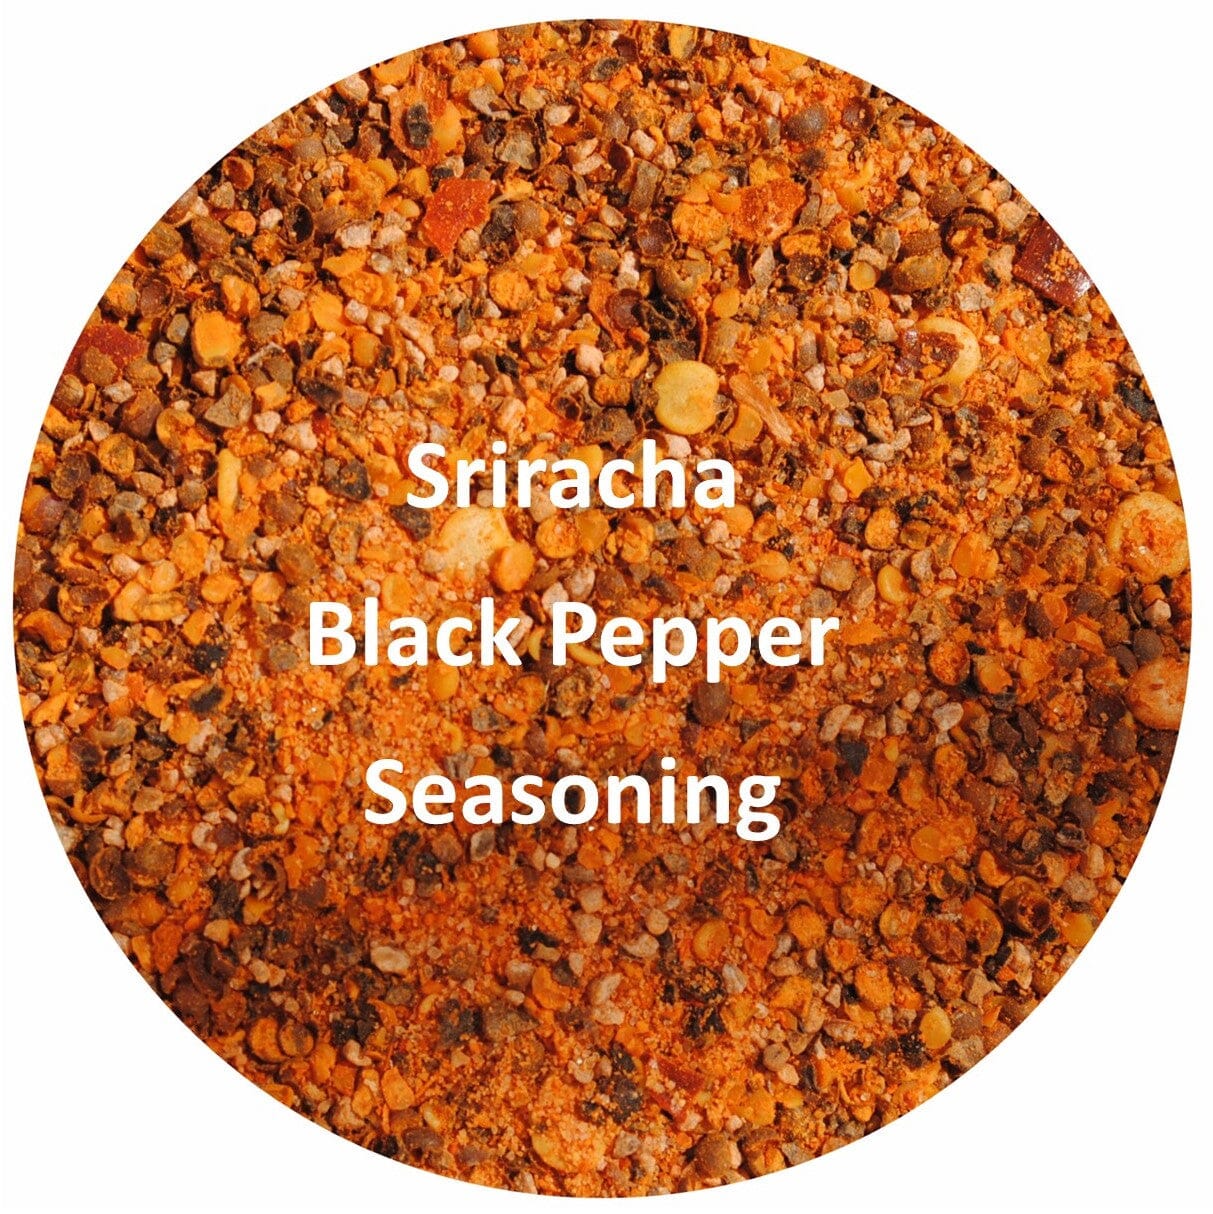 Sriracha Ground Black Pepper Seasoning 3.5 oz Bag - Unique Flavors Seasonings Unique Flavors LLC 